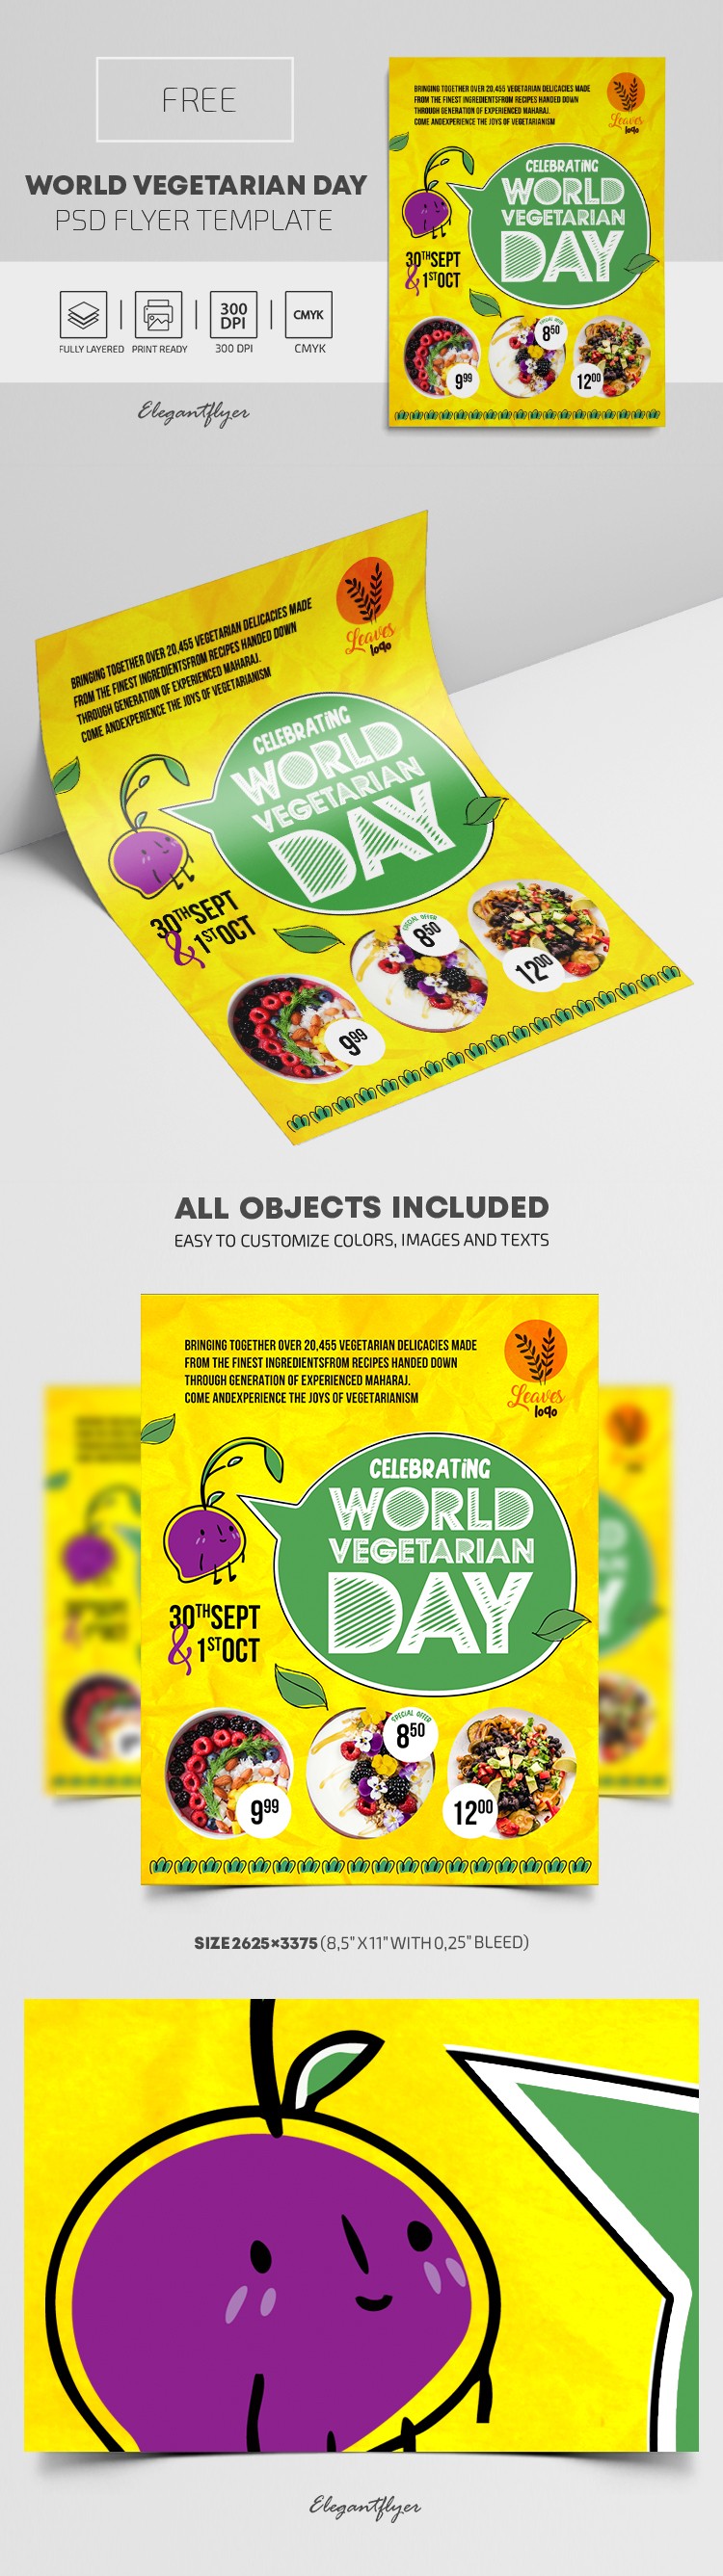 World Vegetarian Day Flyer by ElegantFlyer